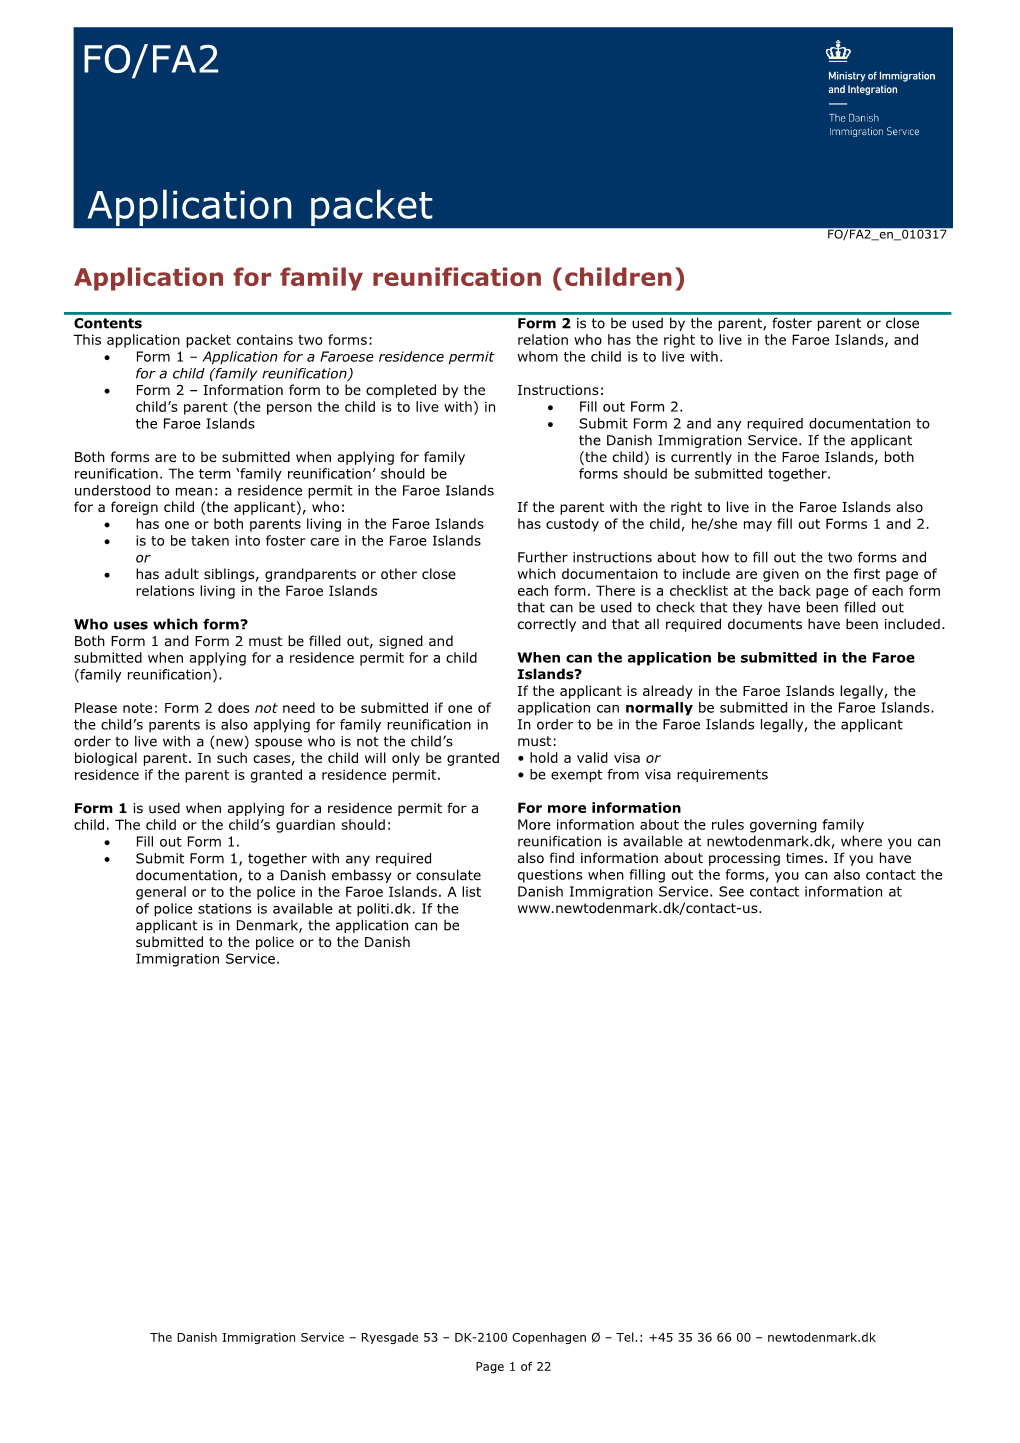 Application for Family Reunification (Children)